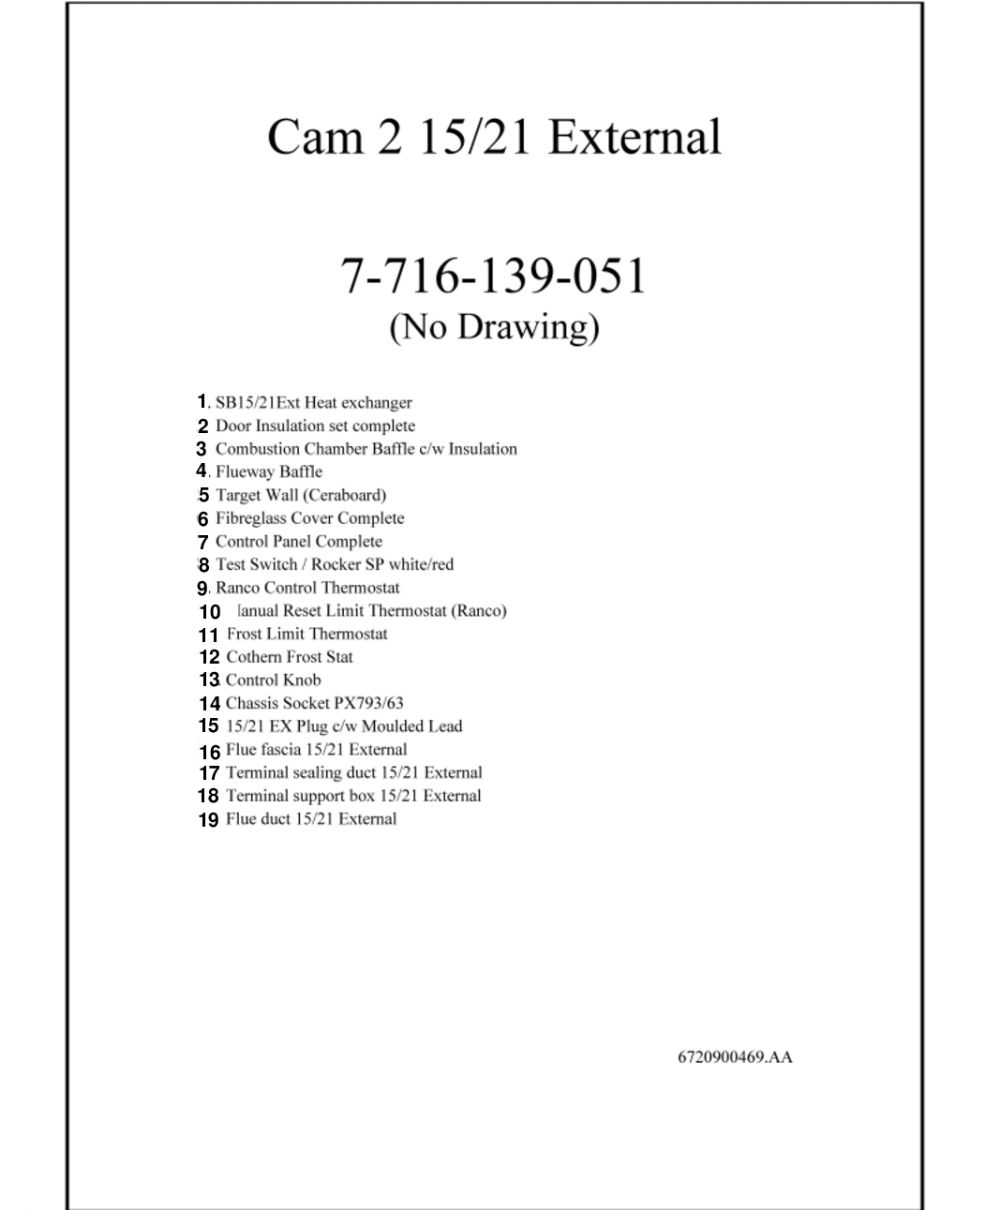 Camray 2 15/21 External - appliance_1510